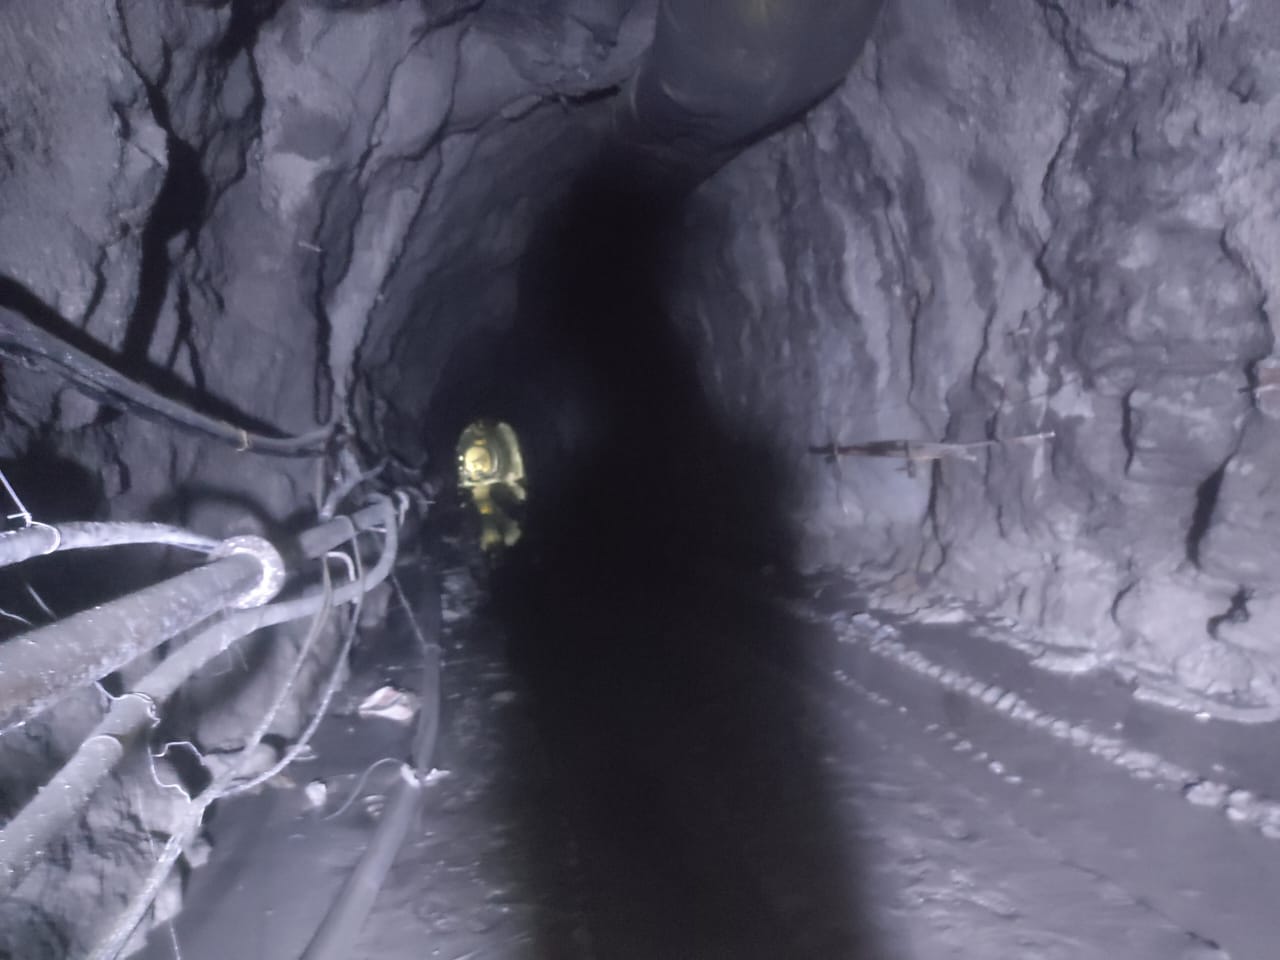 Fiber optic pulling service in Nepal's tunnel 